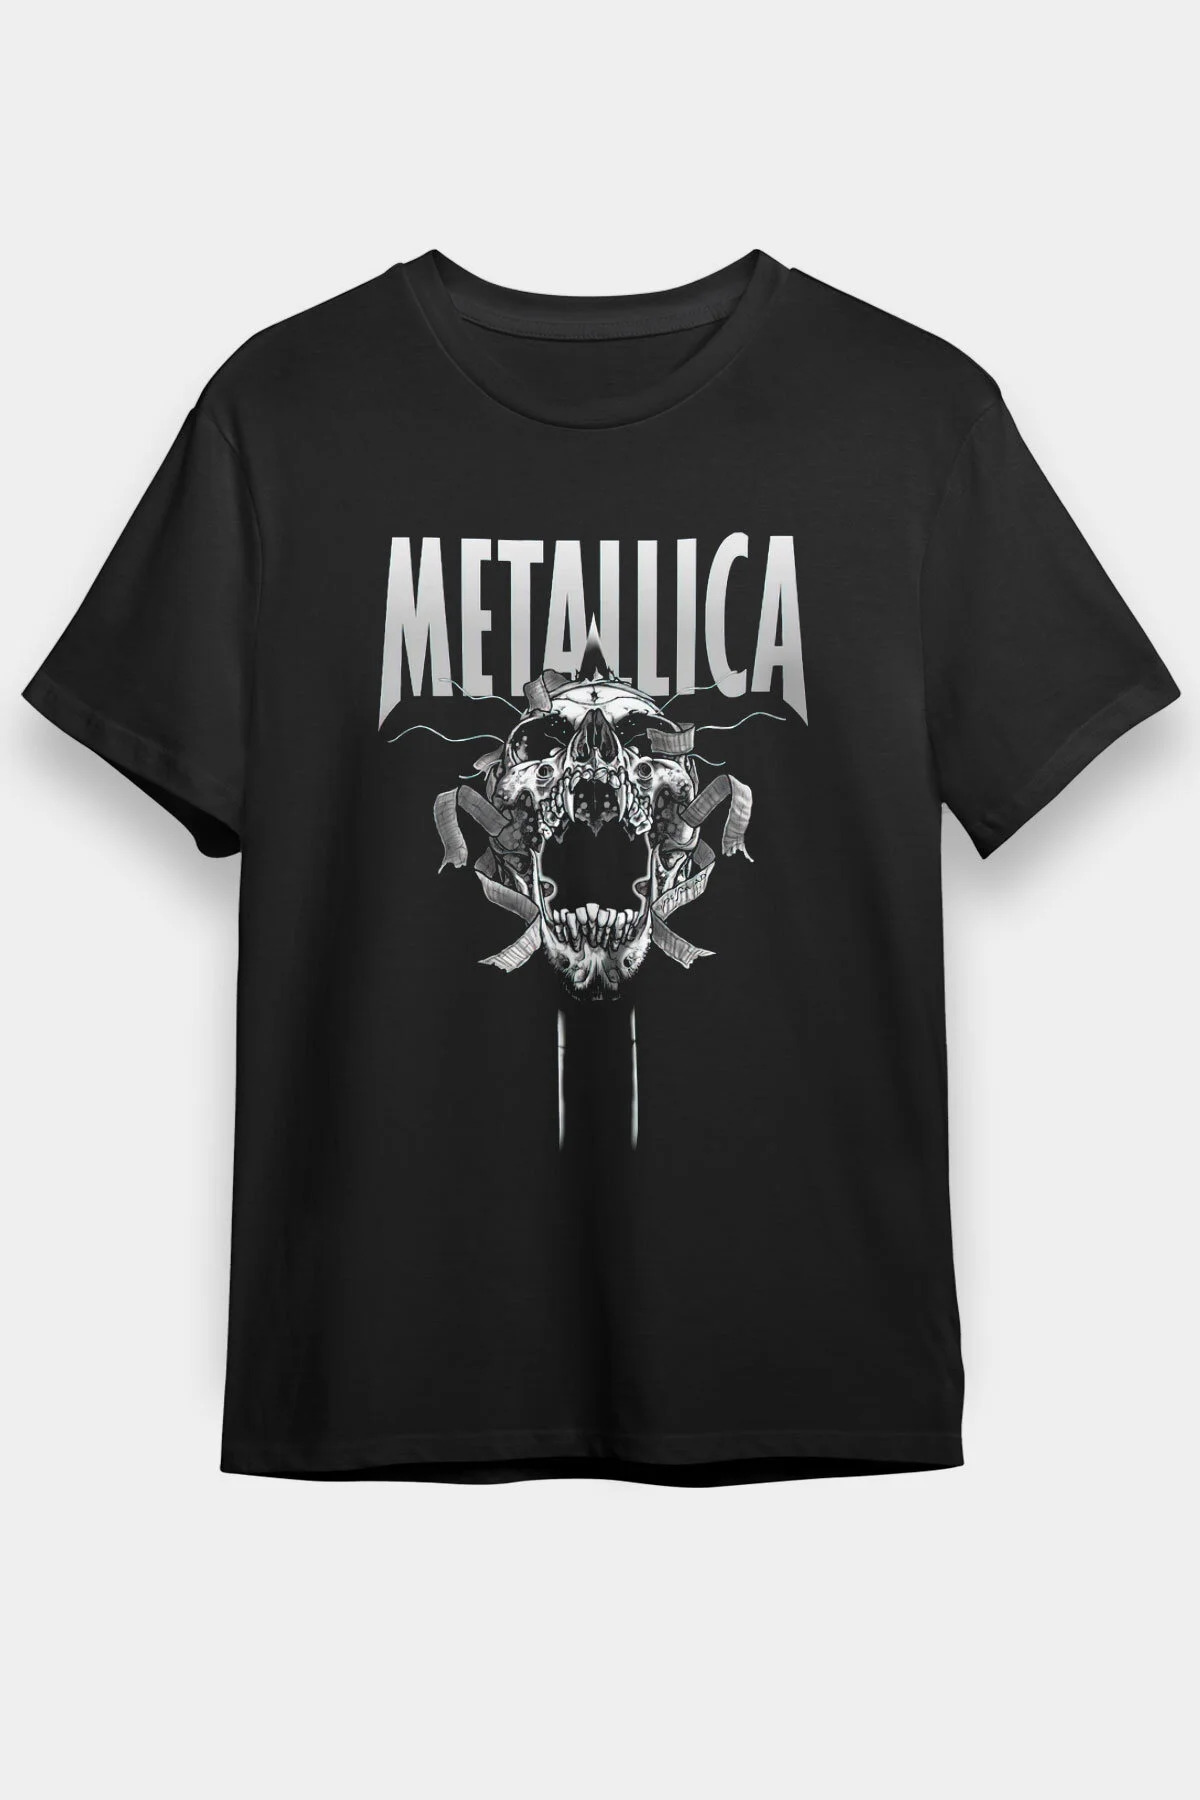 Metallica T shirt, Music Band ,Unisex Tshirt 49/